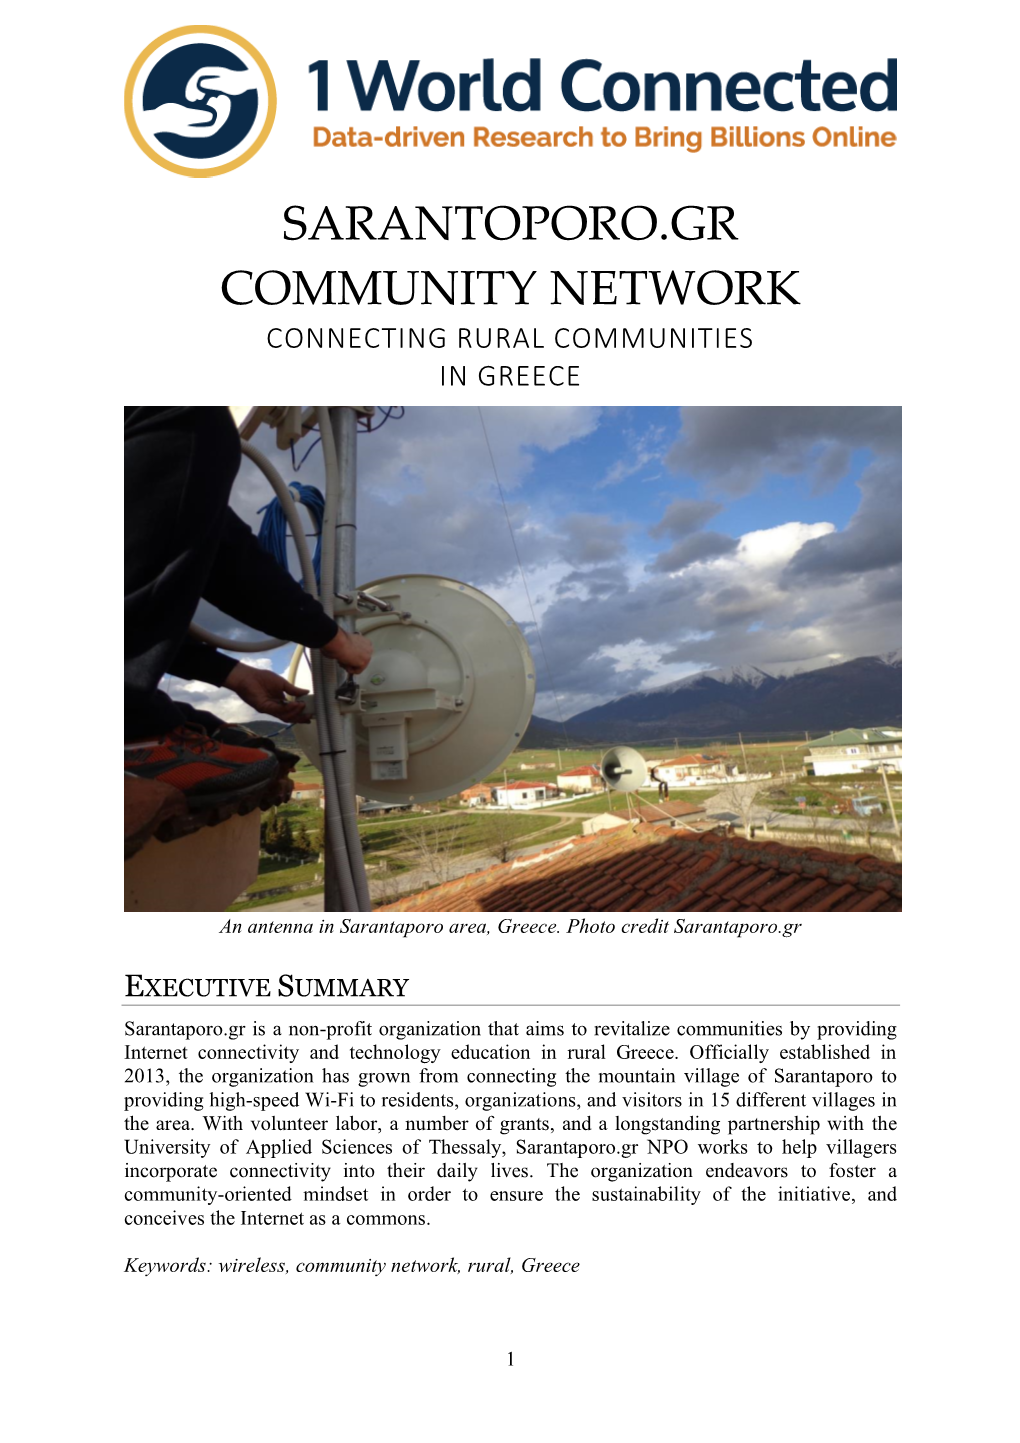 Sarantoporo.Gr Community Network Connecting Rural Communities in Greece